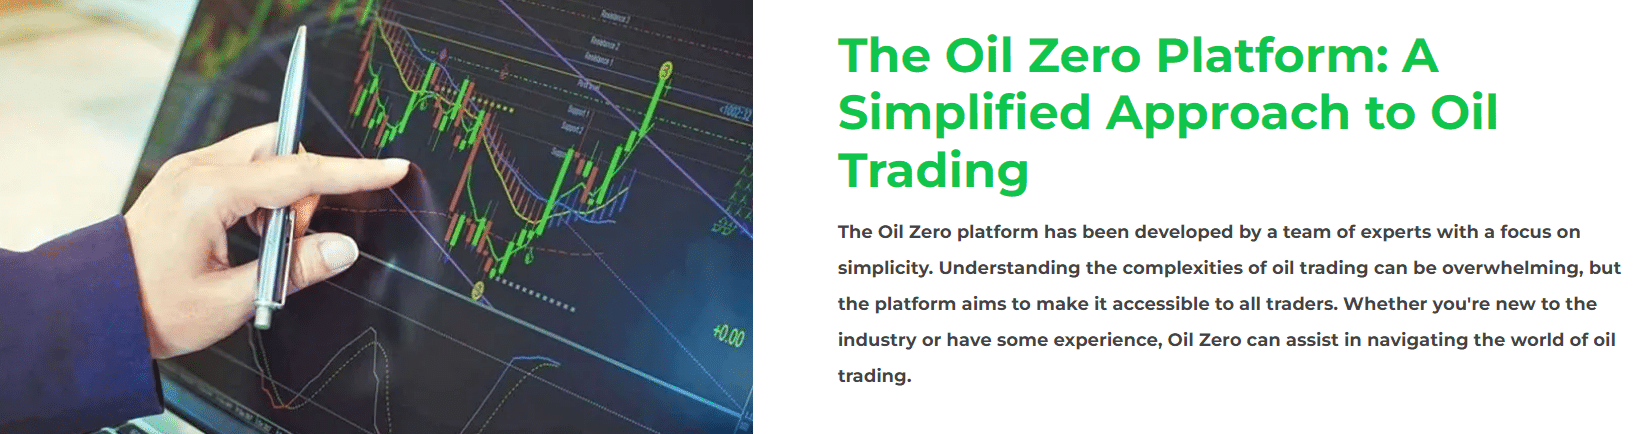 Oil zero platform